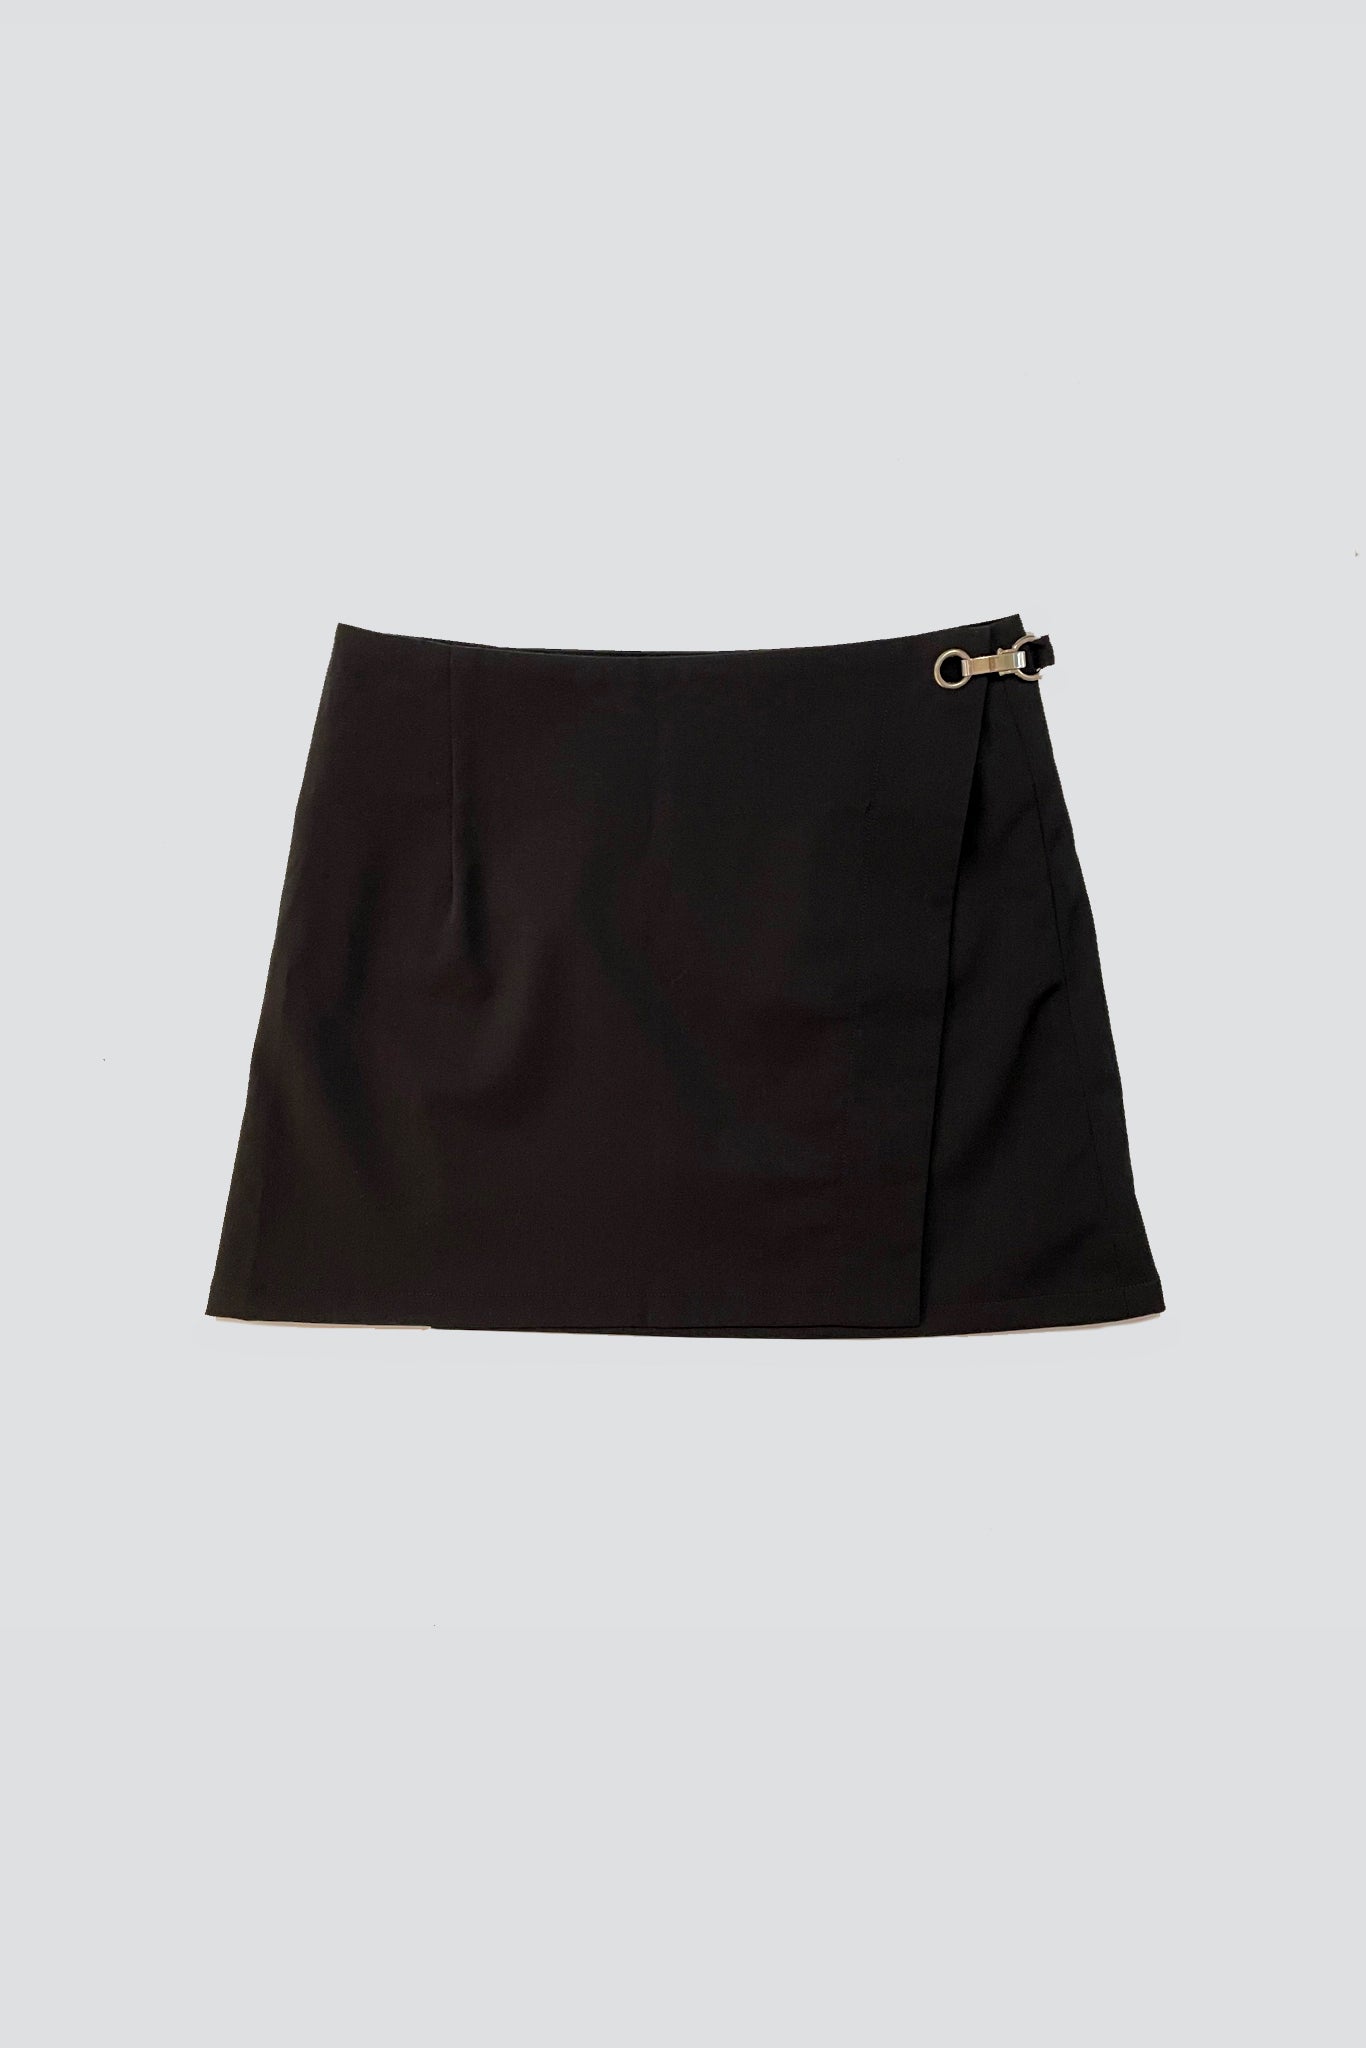 Black Suiting Mini Skirt